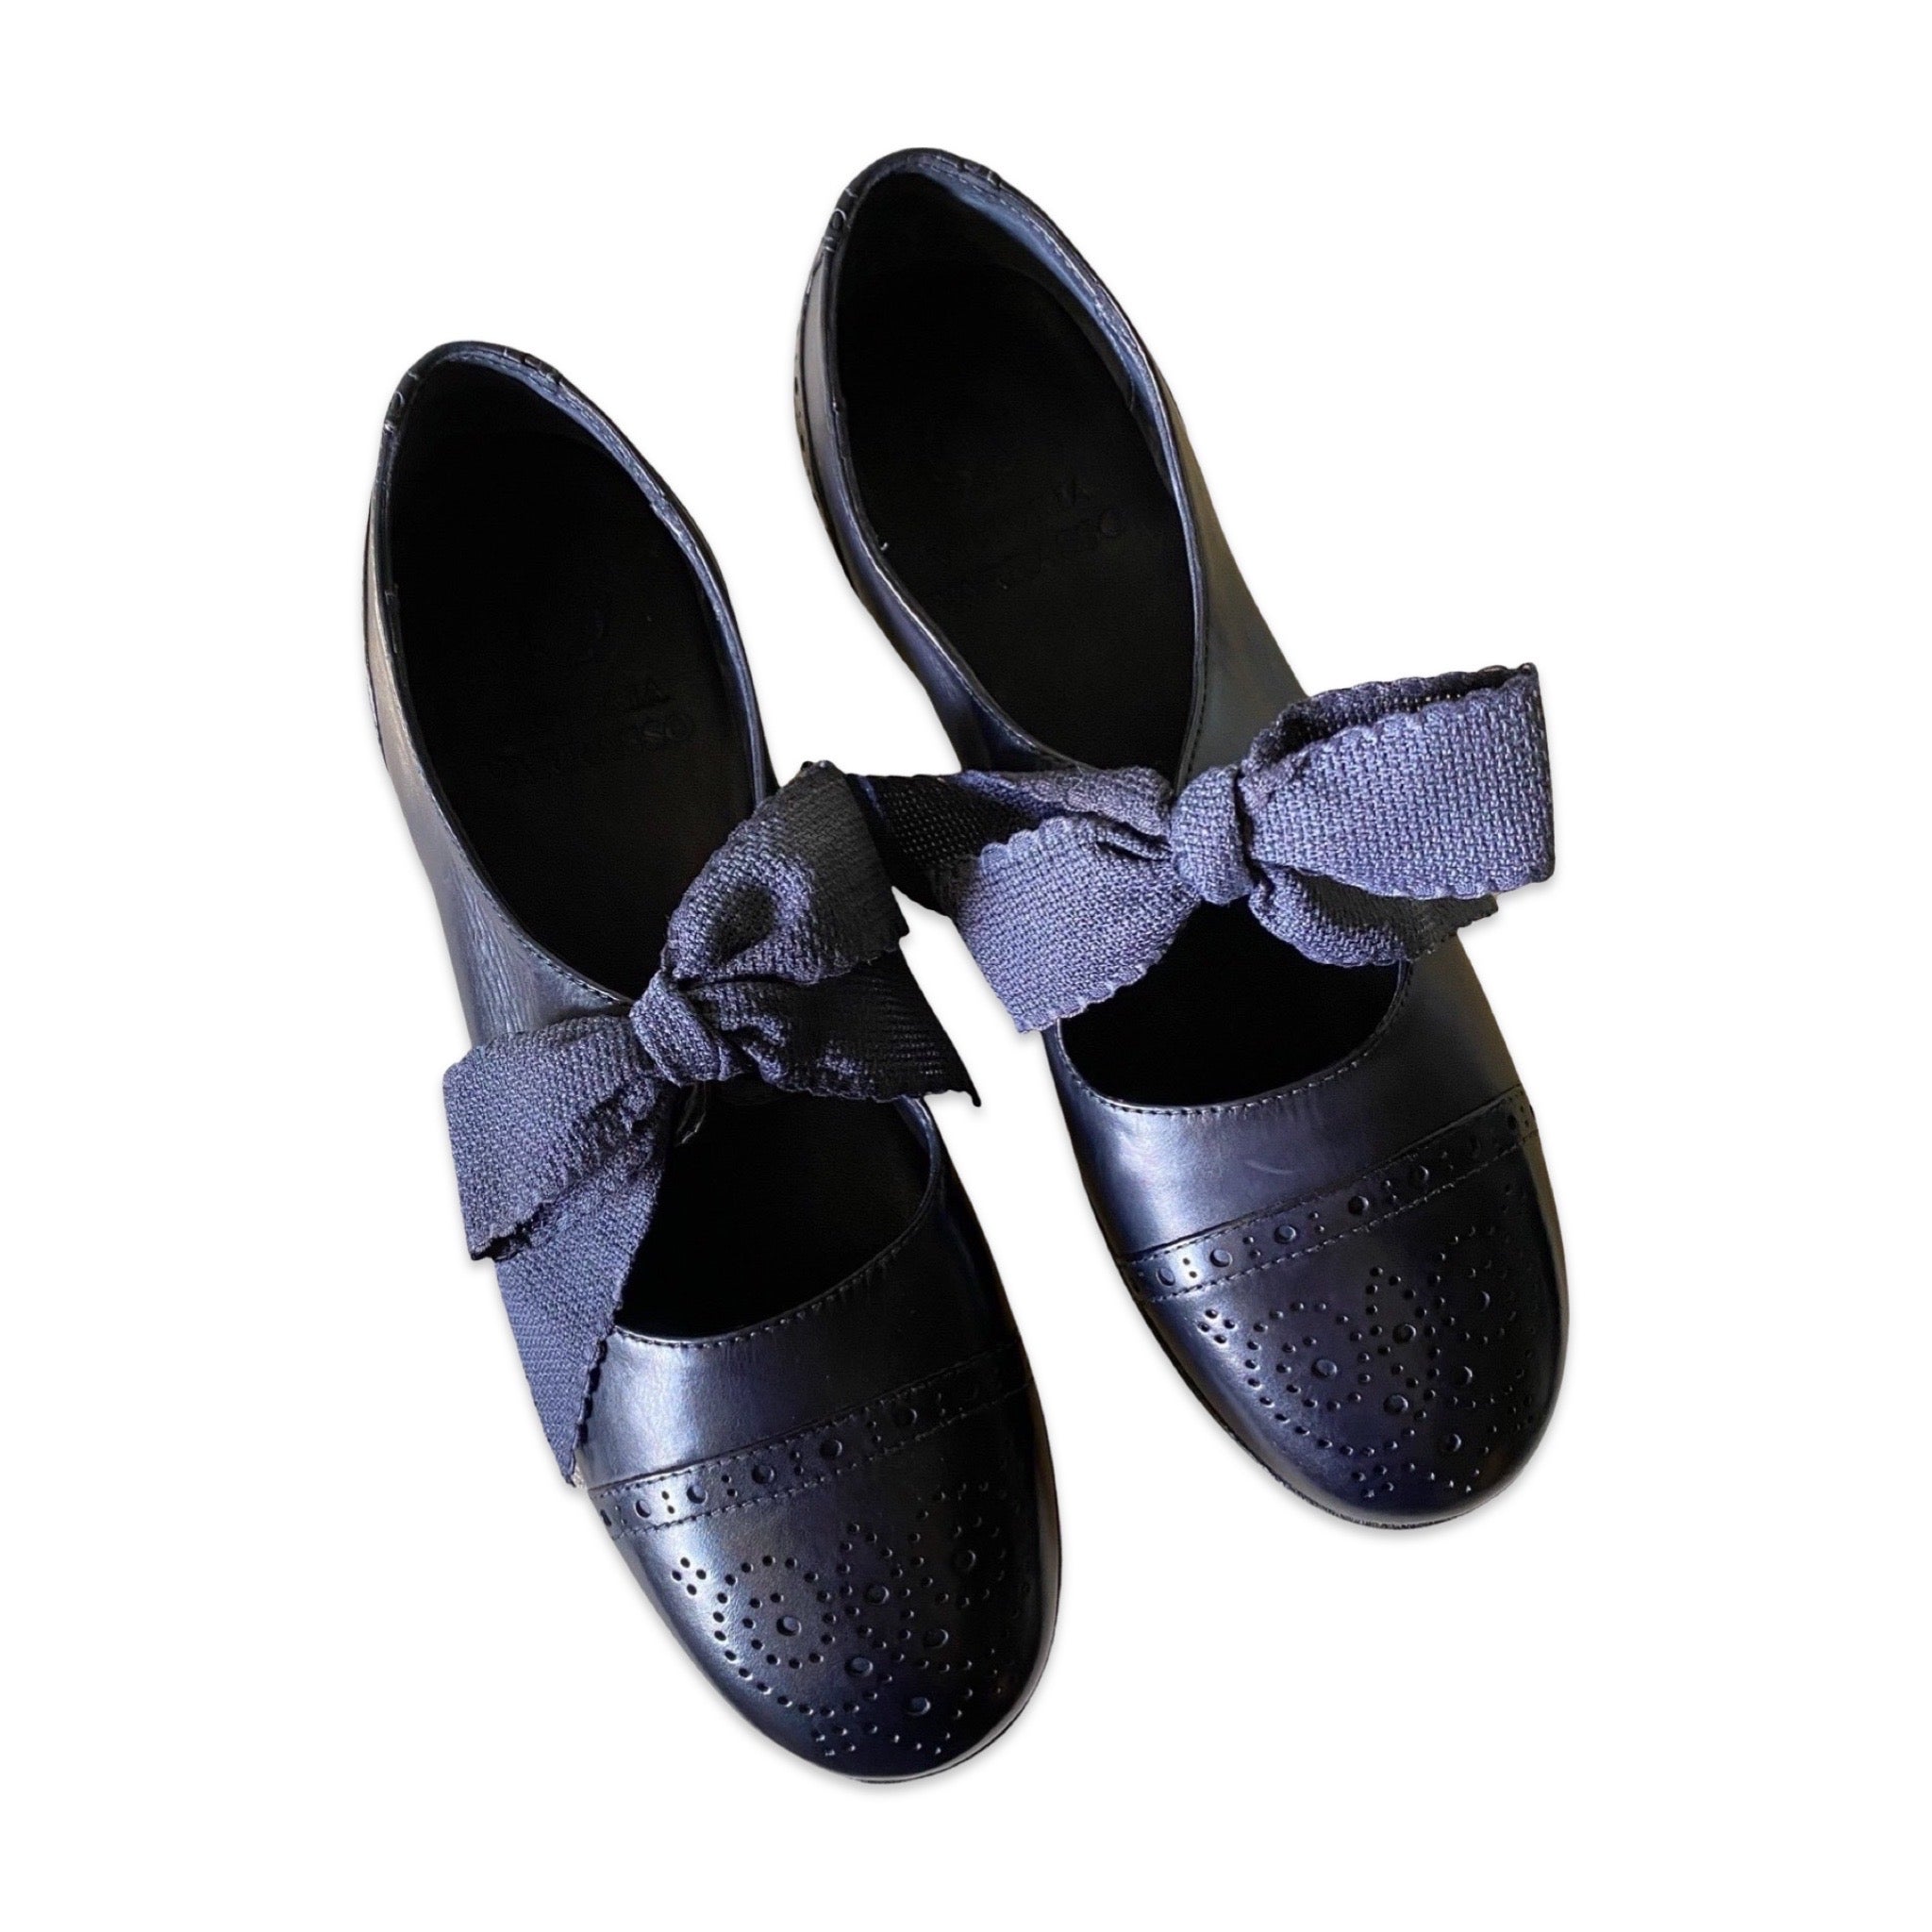 Victoria Varrasso Black Beatrix Bow Shoes